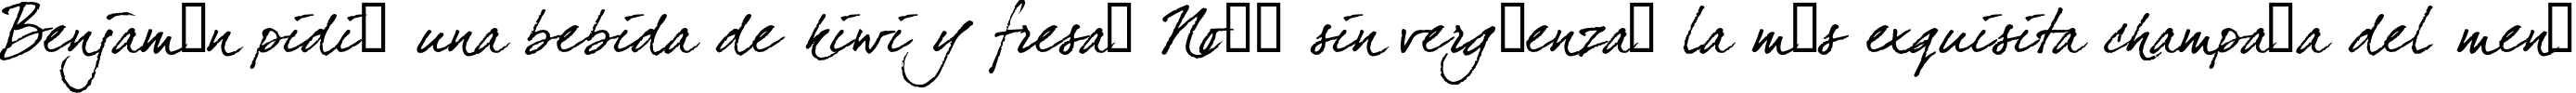 Пример написания шрифтом dearJoe four текста на испанском